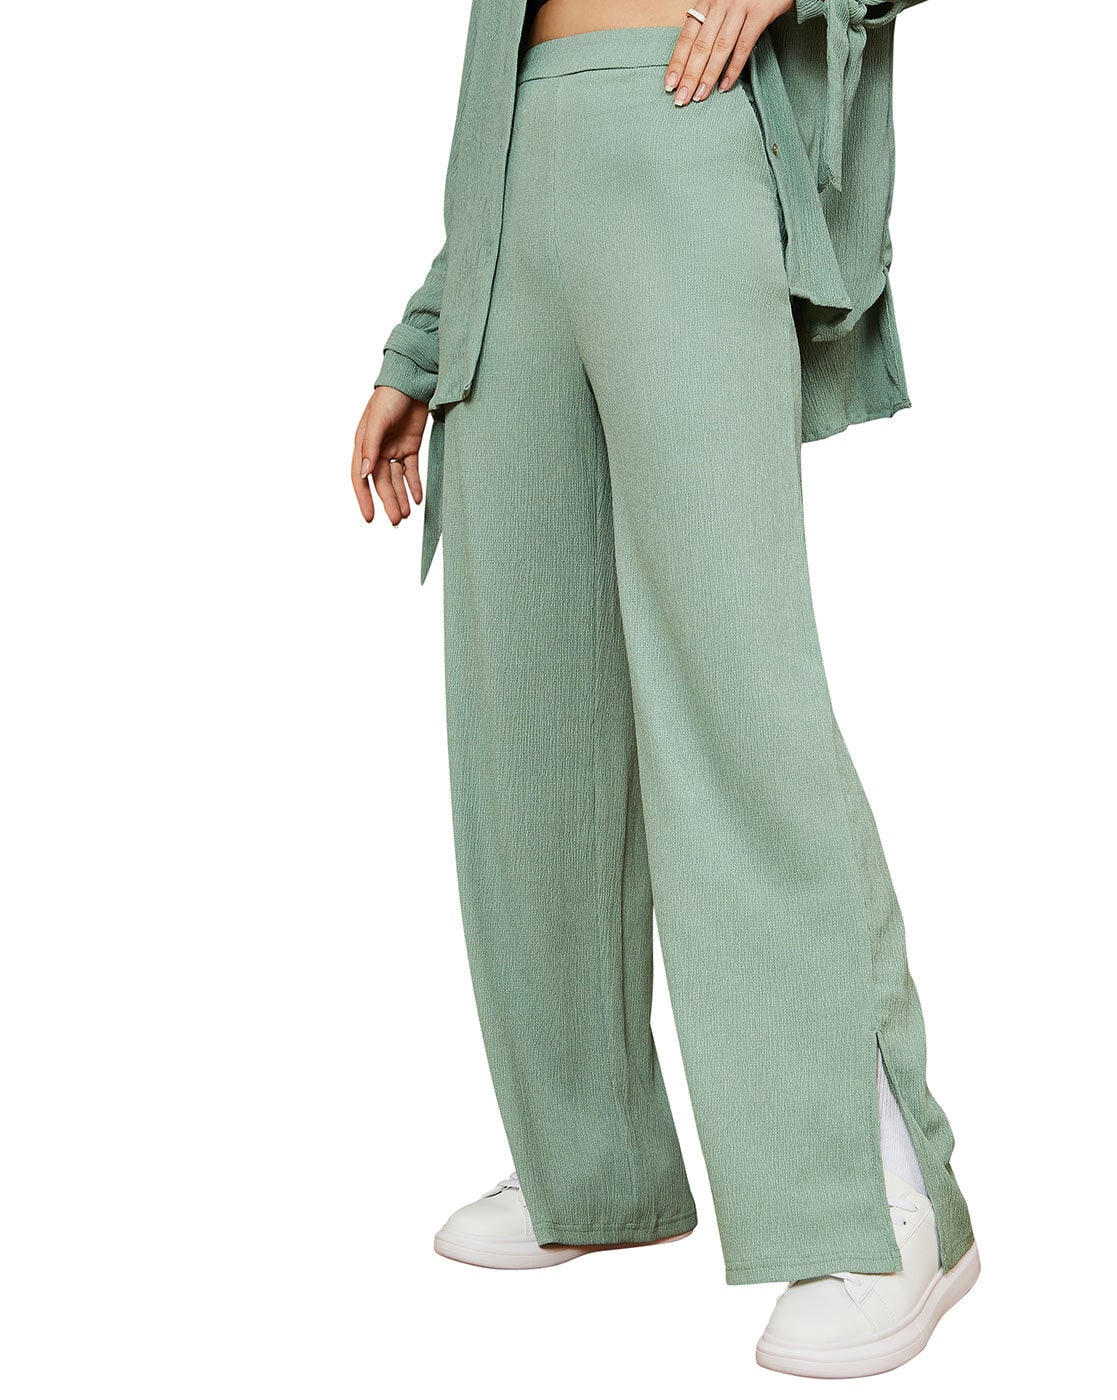 Buy Green Trousers & Pants for Women by Styli Online